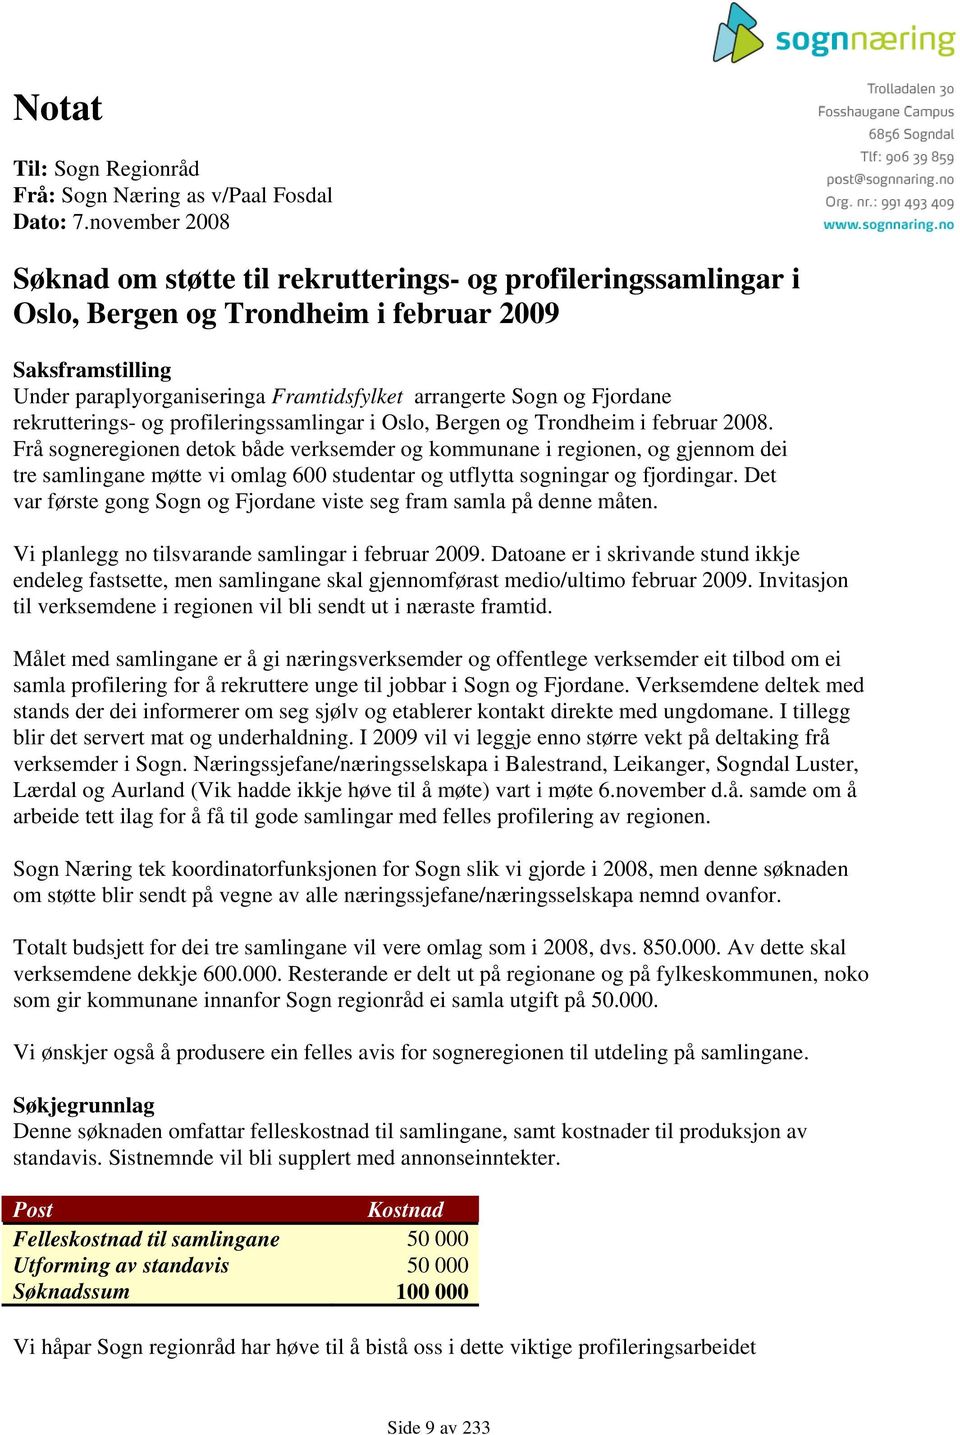 Fjordane rekrutterings- og profileringssamlingar i Oslo, Bergen og Trondheim i februar 2008.